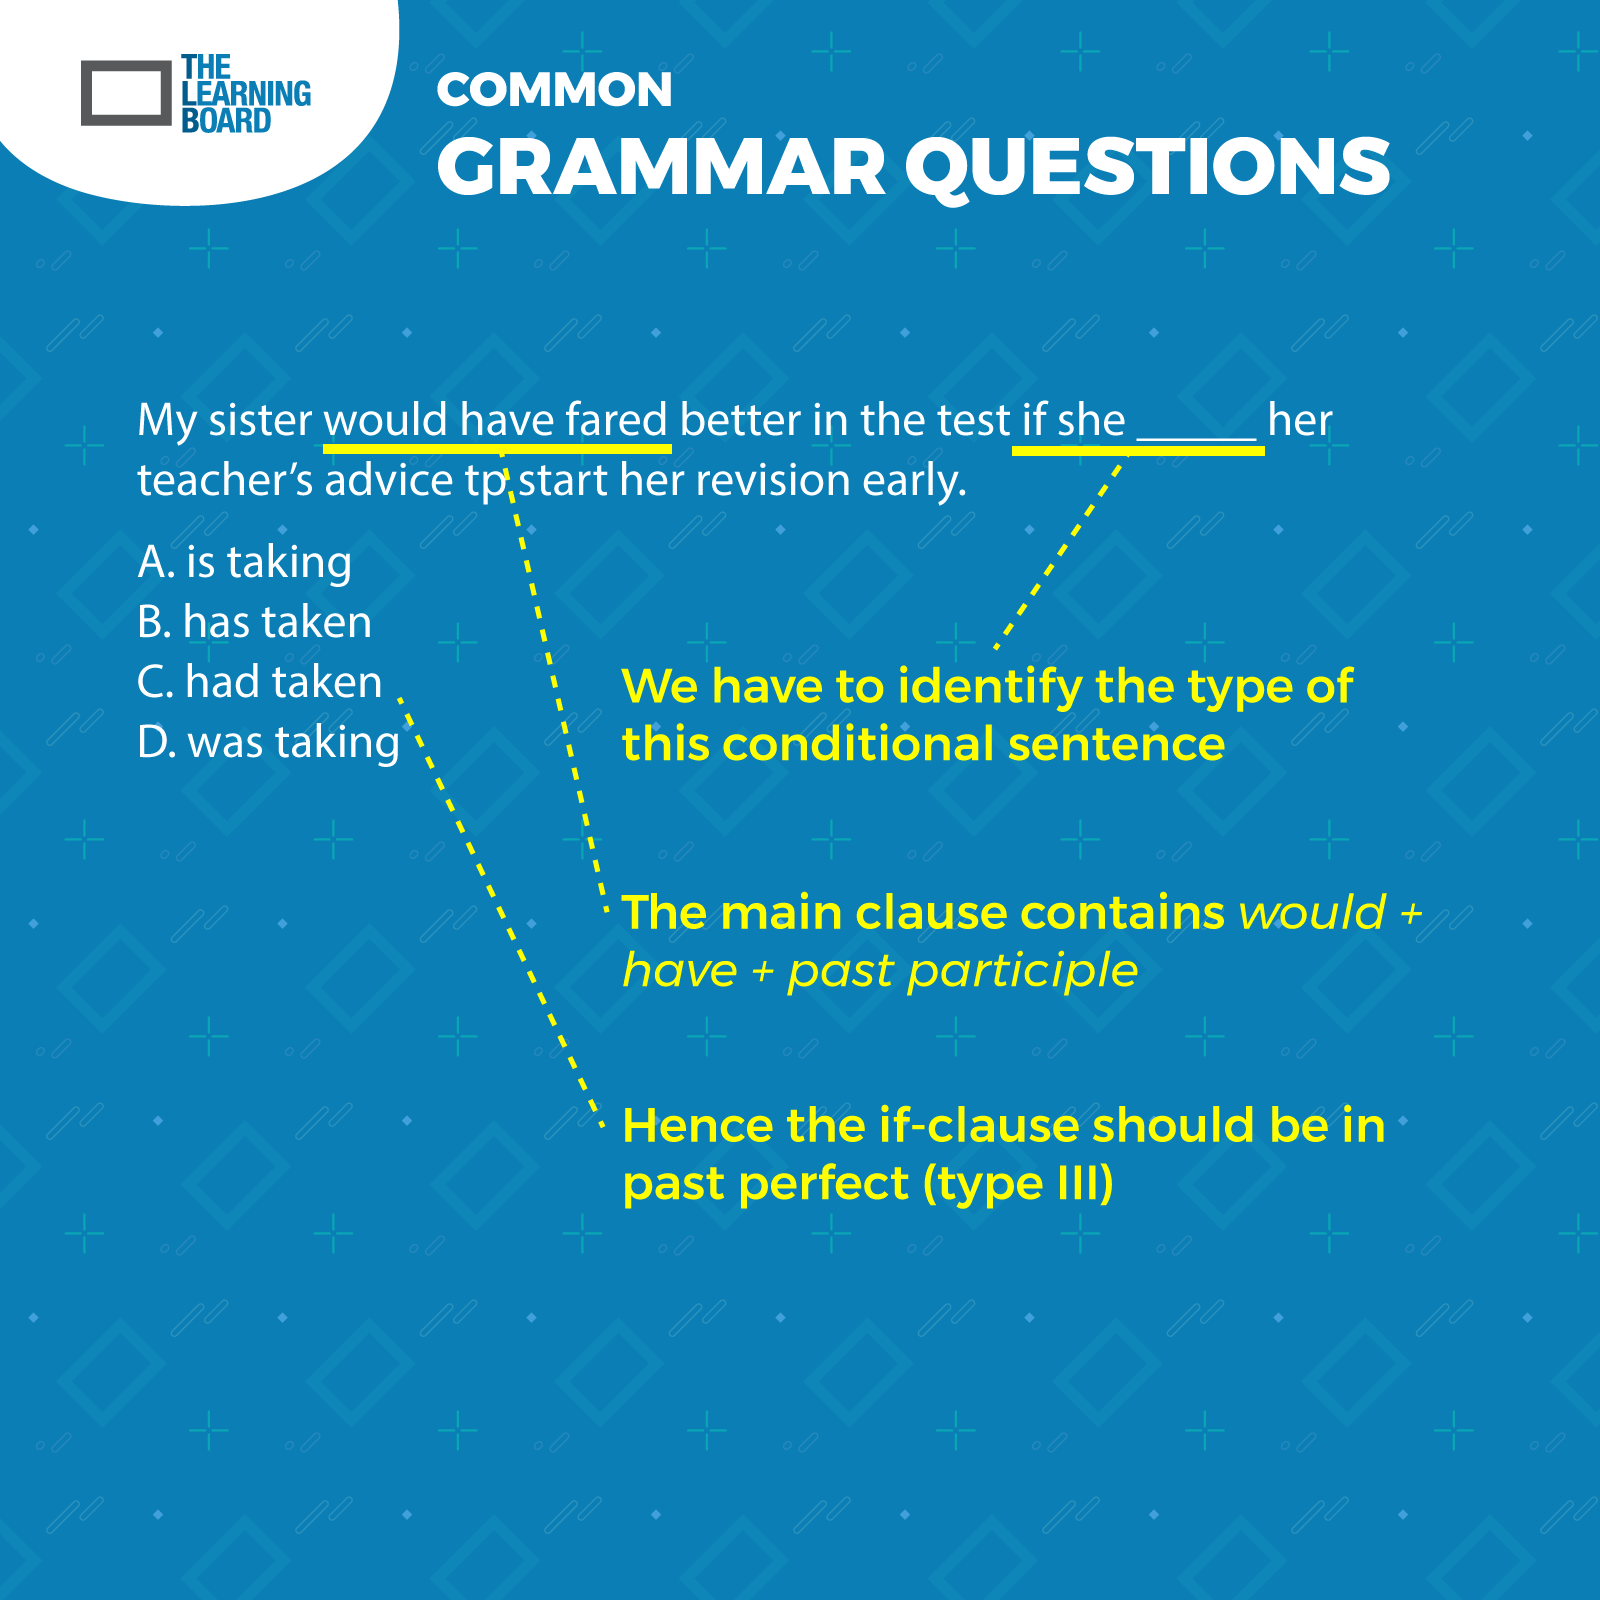 grammar question 4